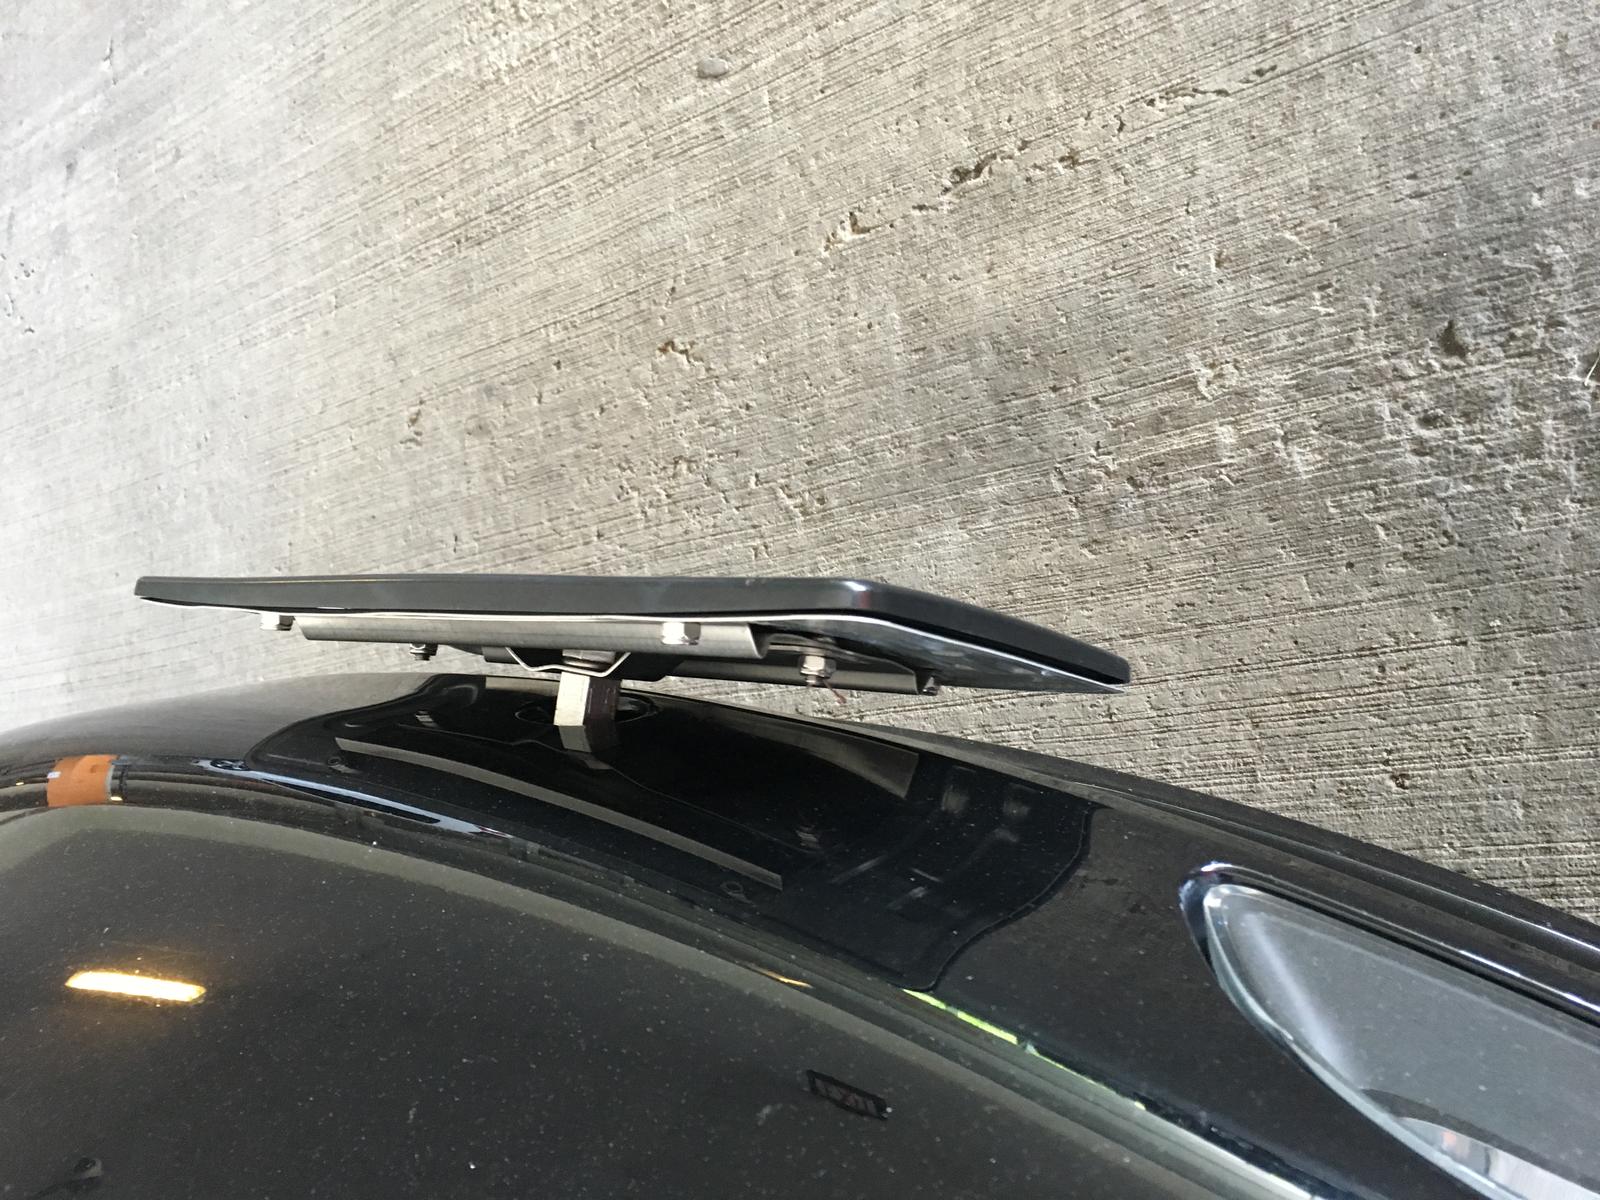 Tow hook front license plate holder - Rennlist - Porsche Discussion Forums